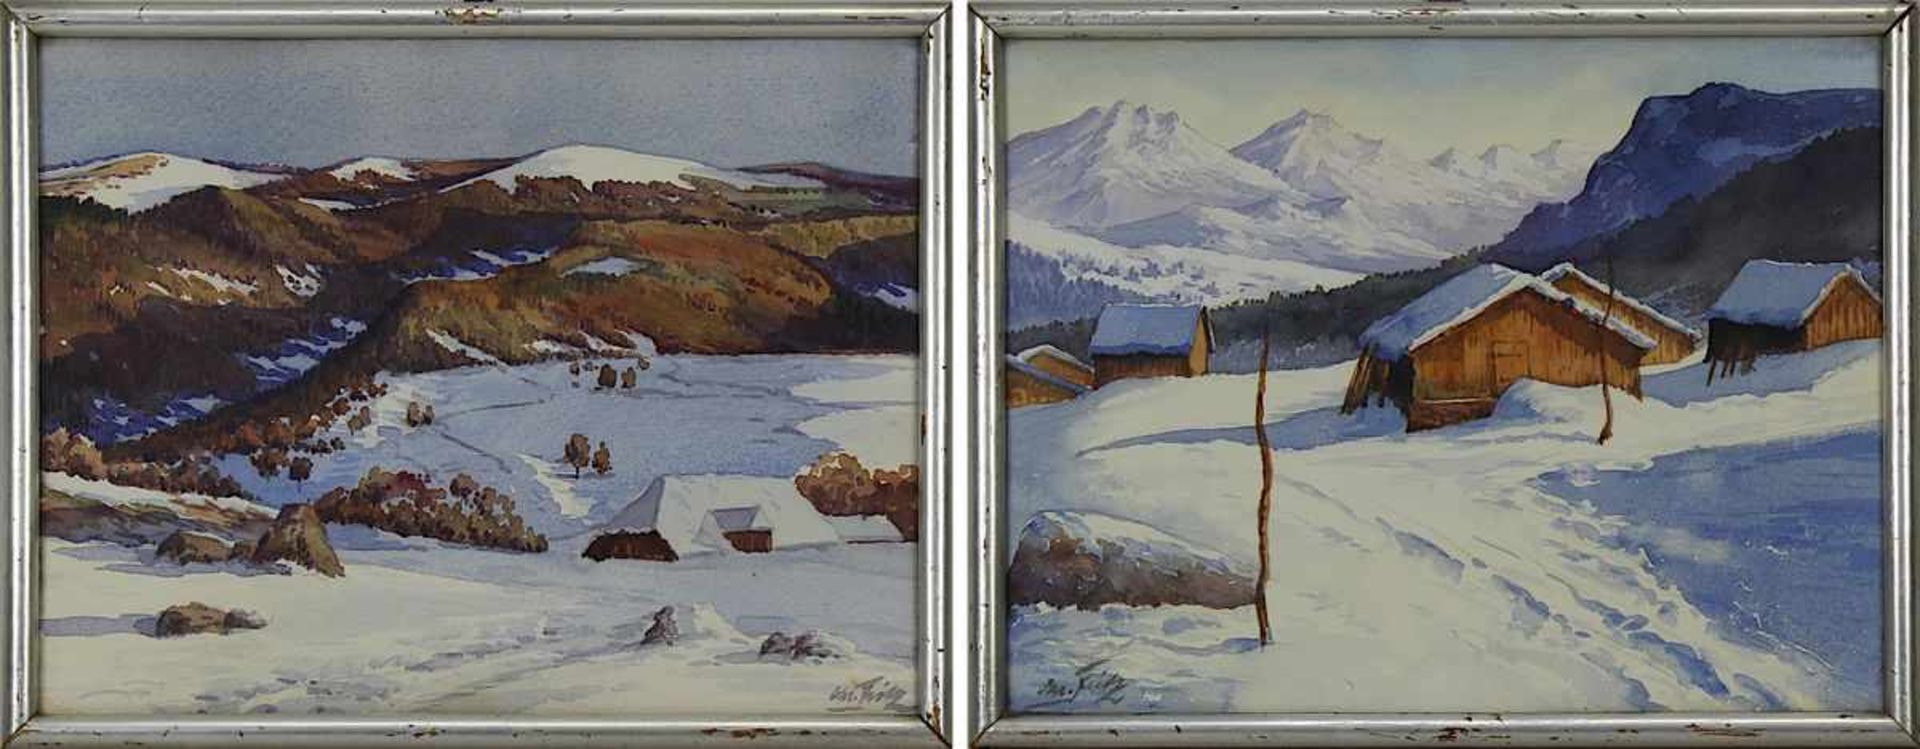 Fritz, M. (deutscher Aquarellist, 1.Drittel 20.Jh), Zwei alpine Winterlandschaften, Aquarell,